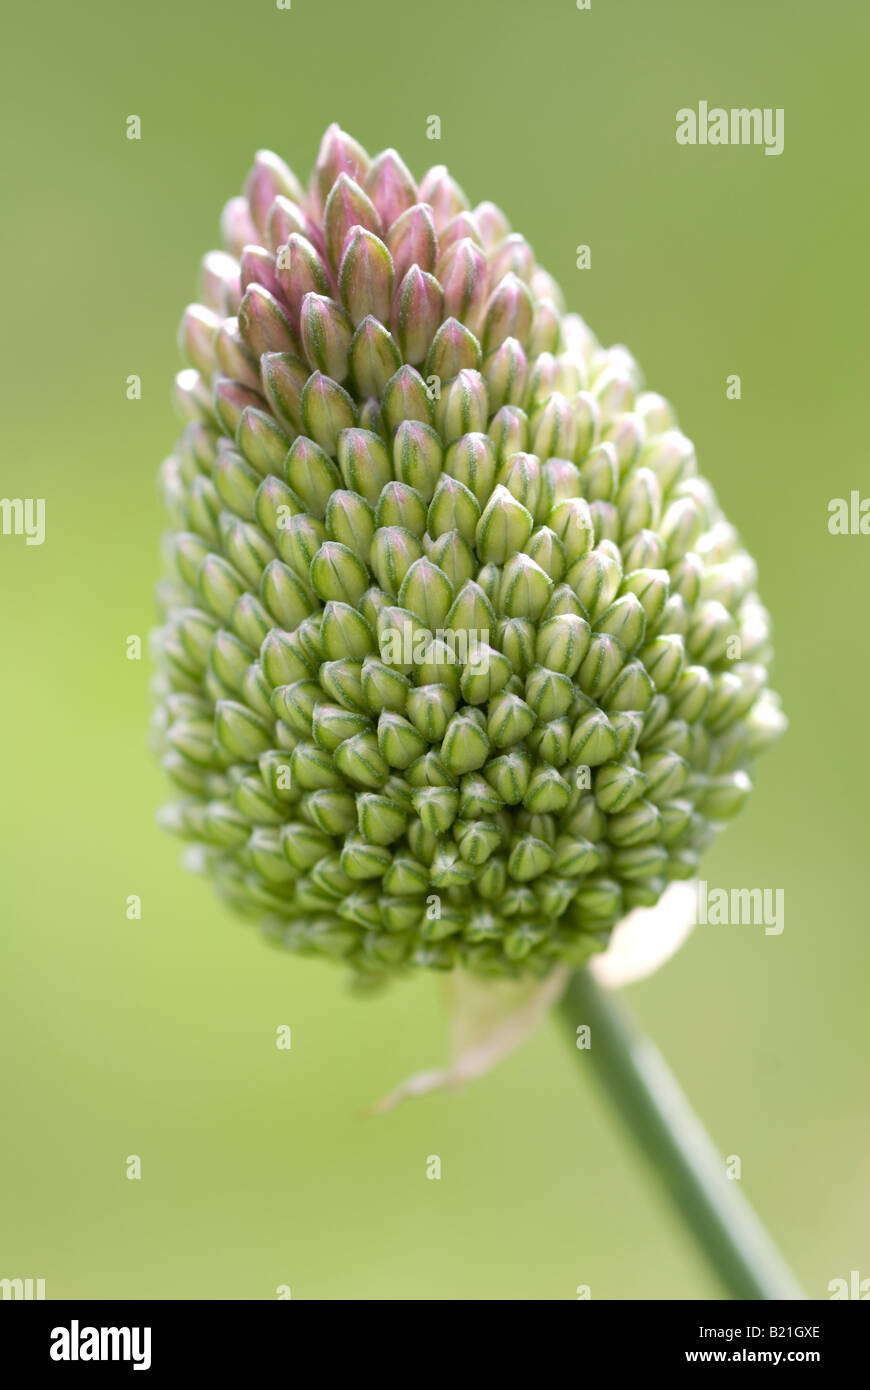 allium flower head prior to opening Stock Photo